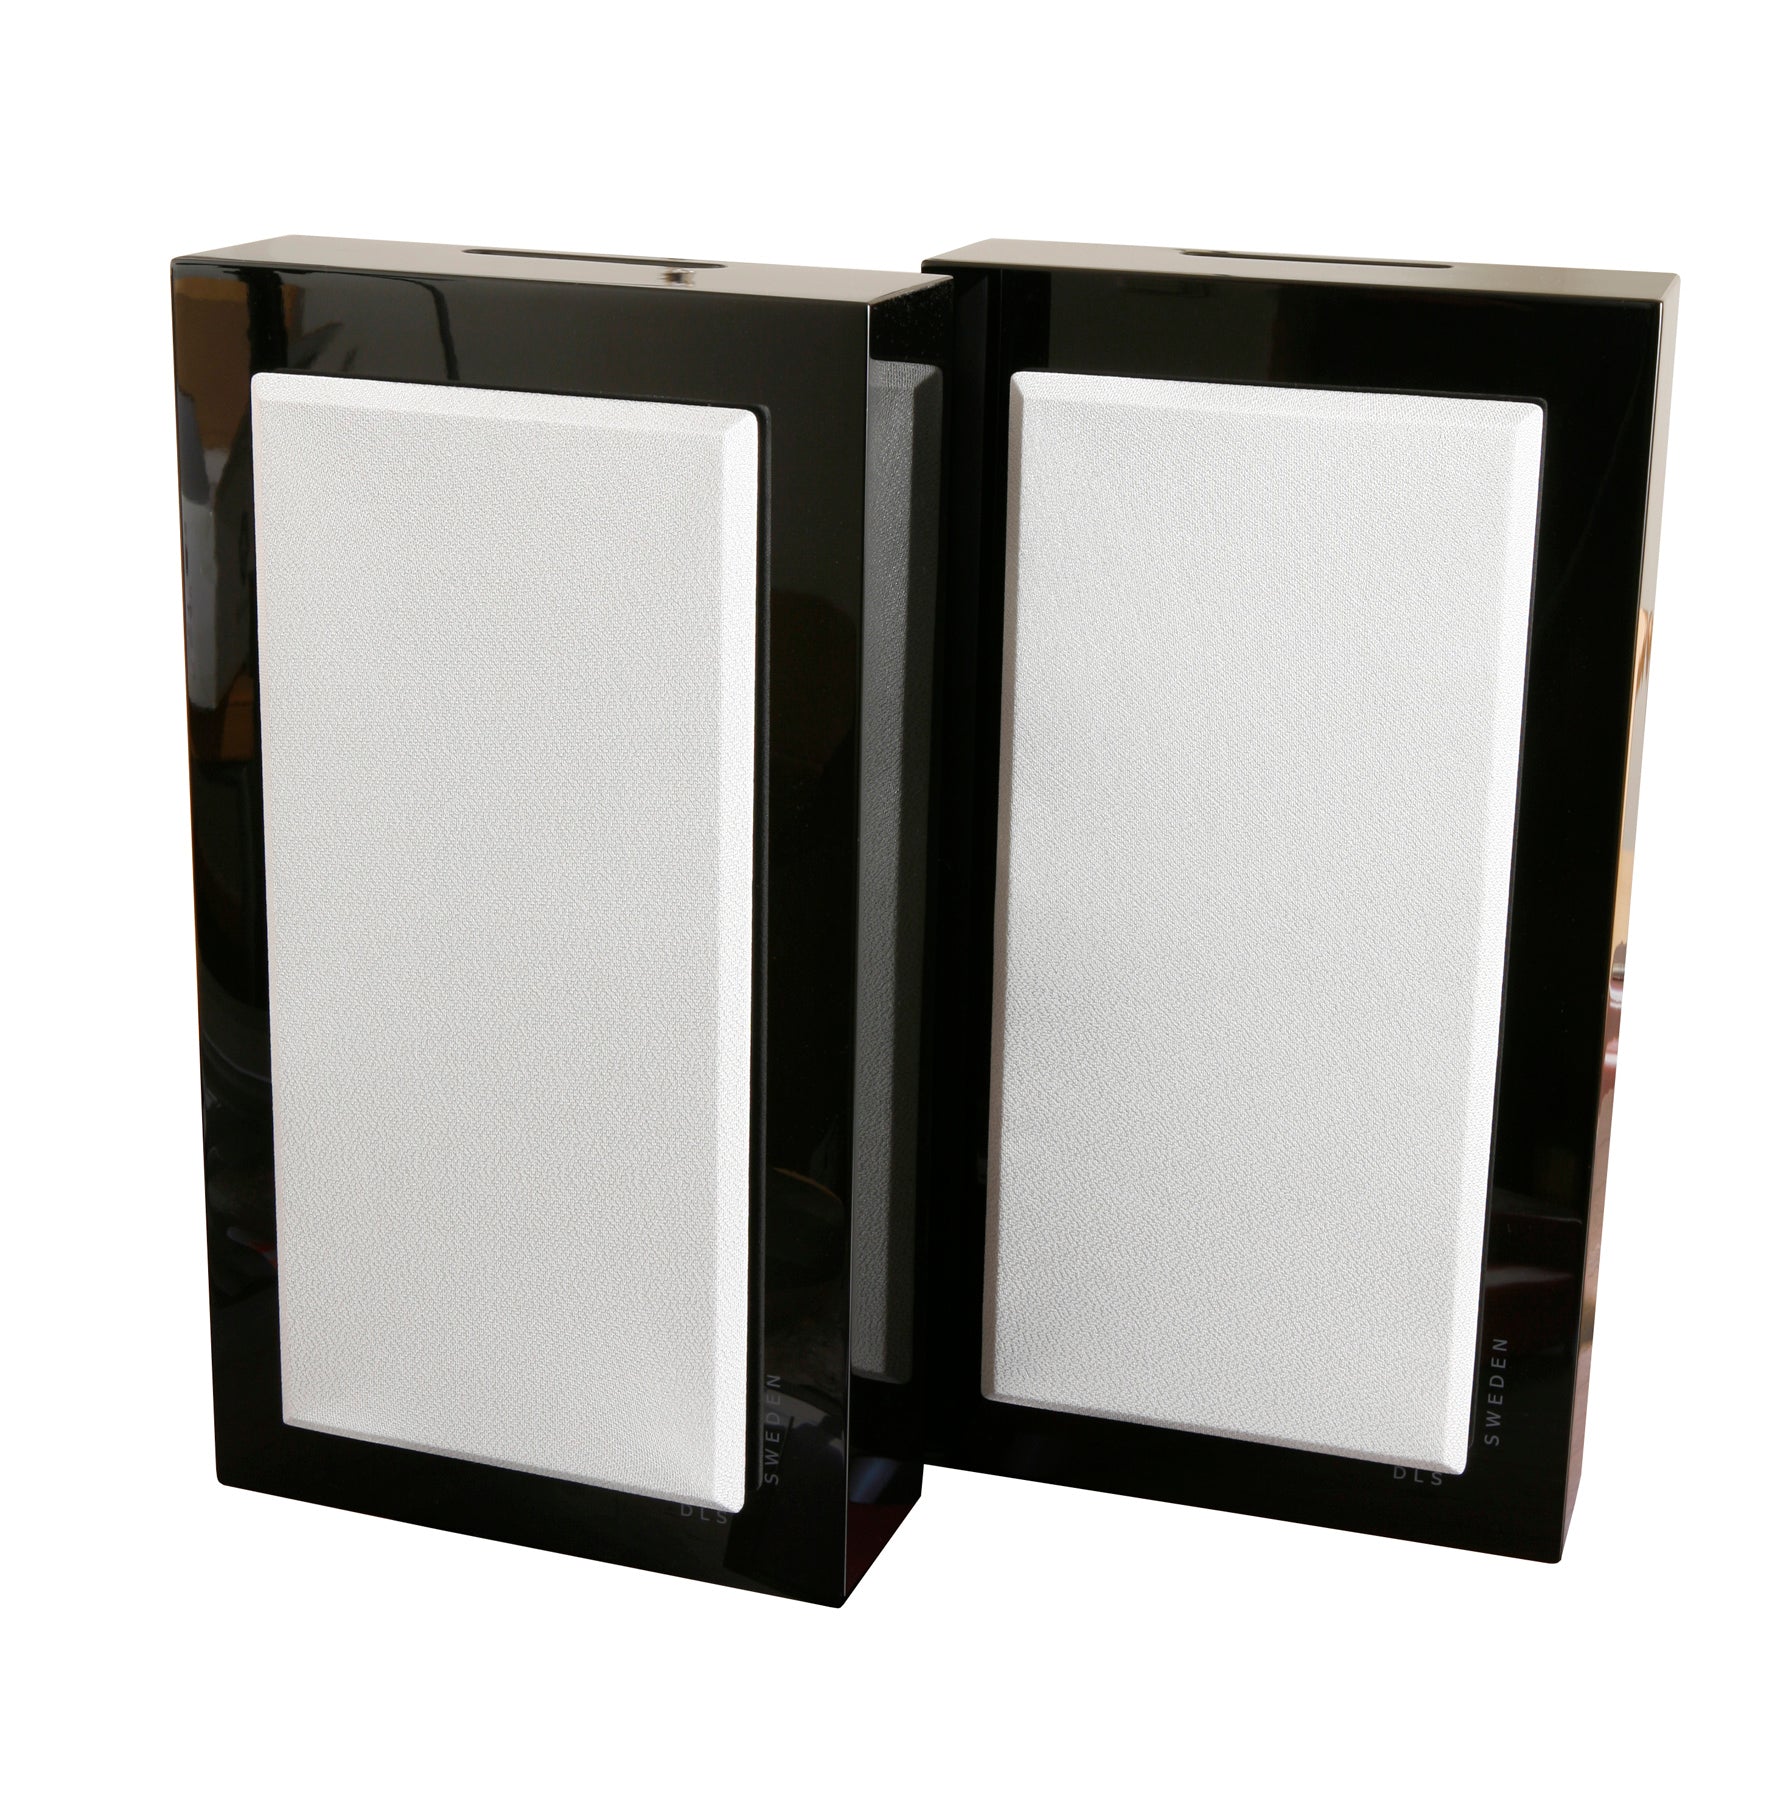 DLS Flatbox Midi On wall speaker - Pair - Auratech LLC